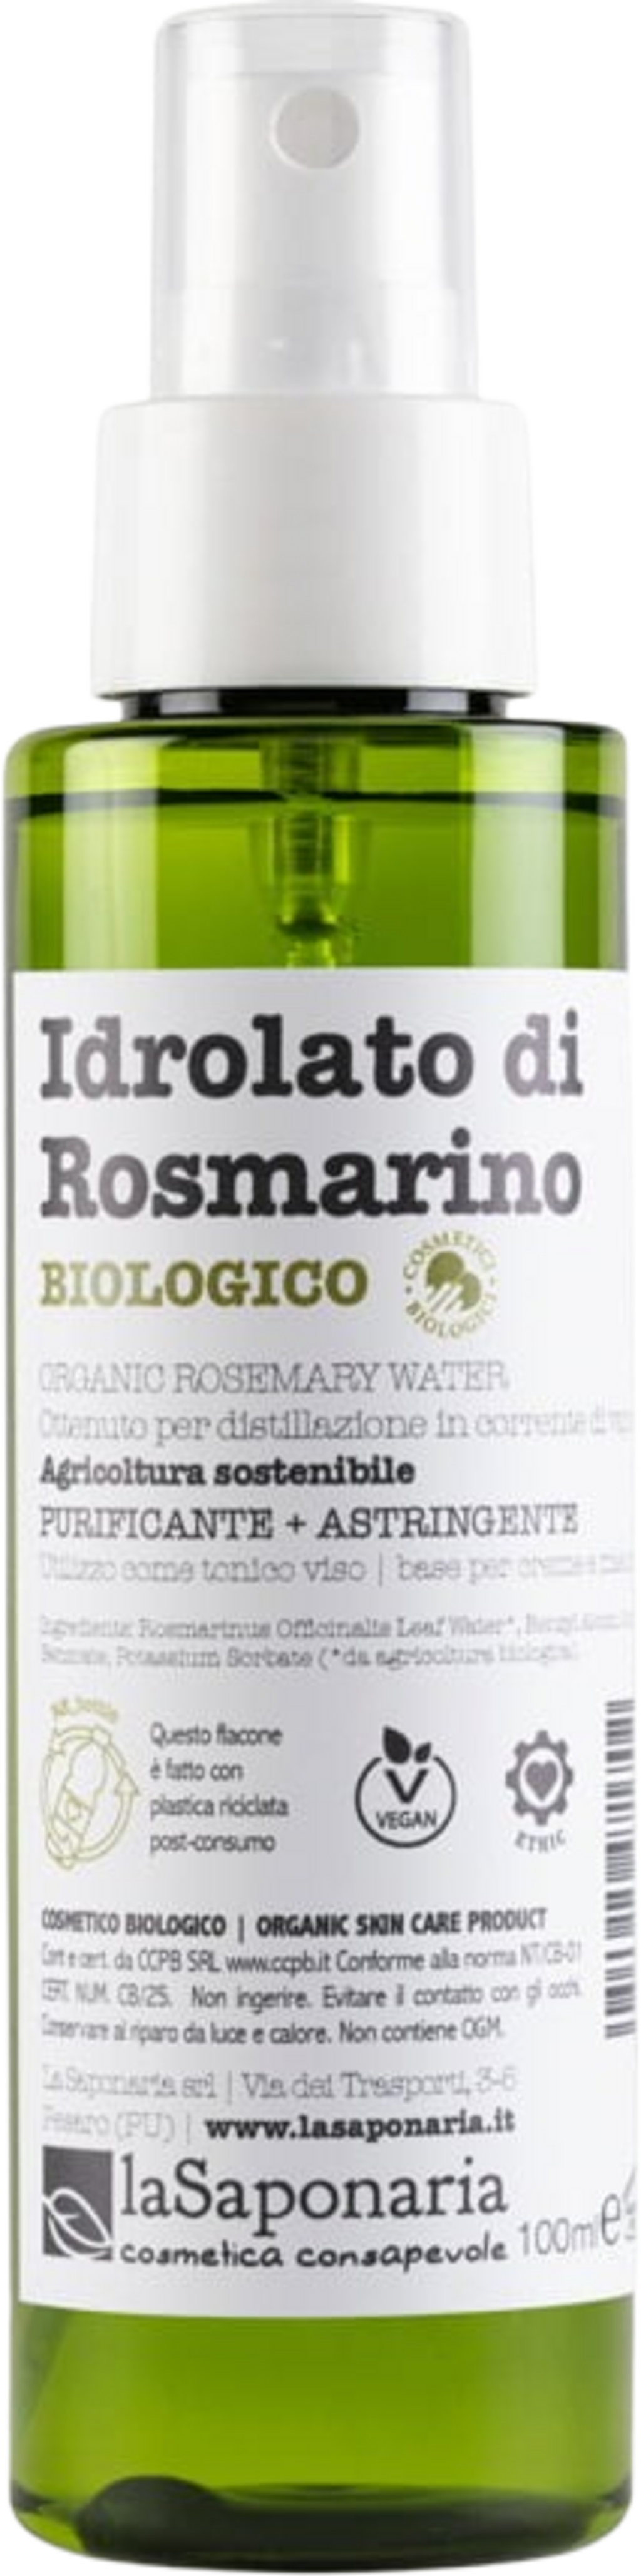 Idrolato di Rosmarino - 100 ml